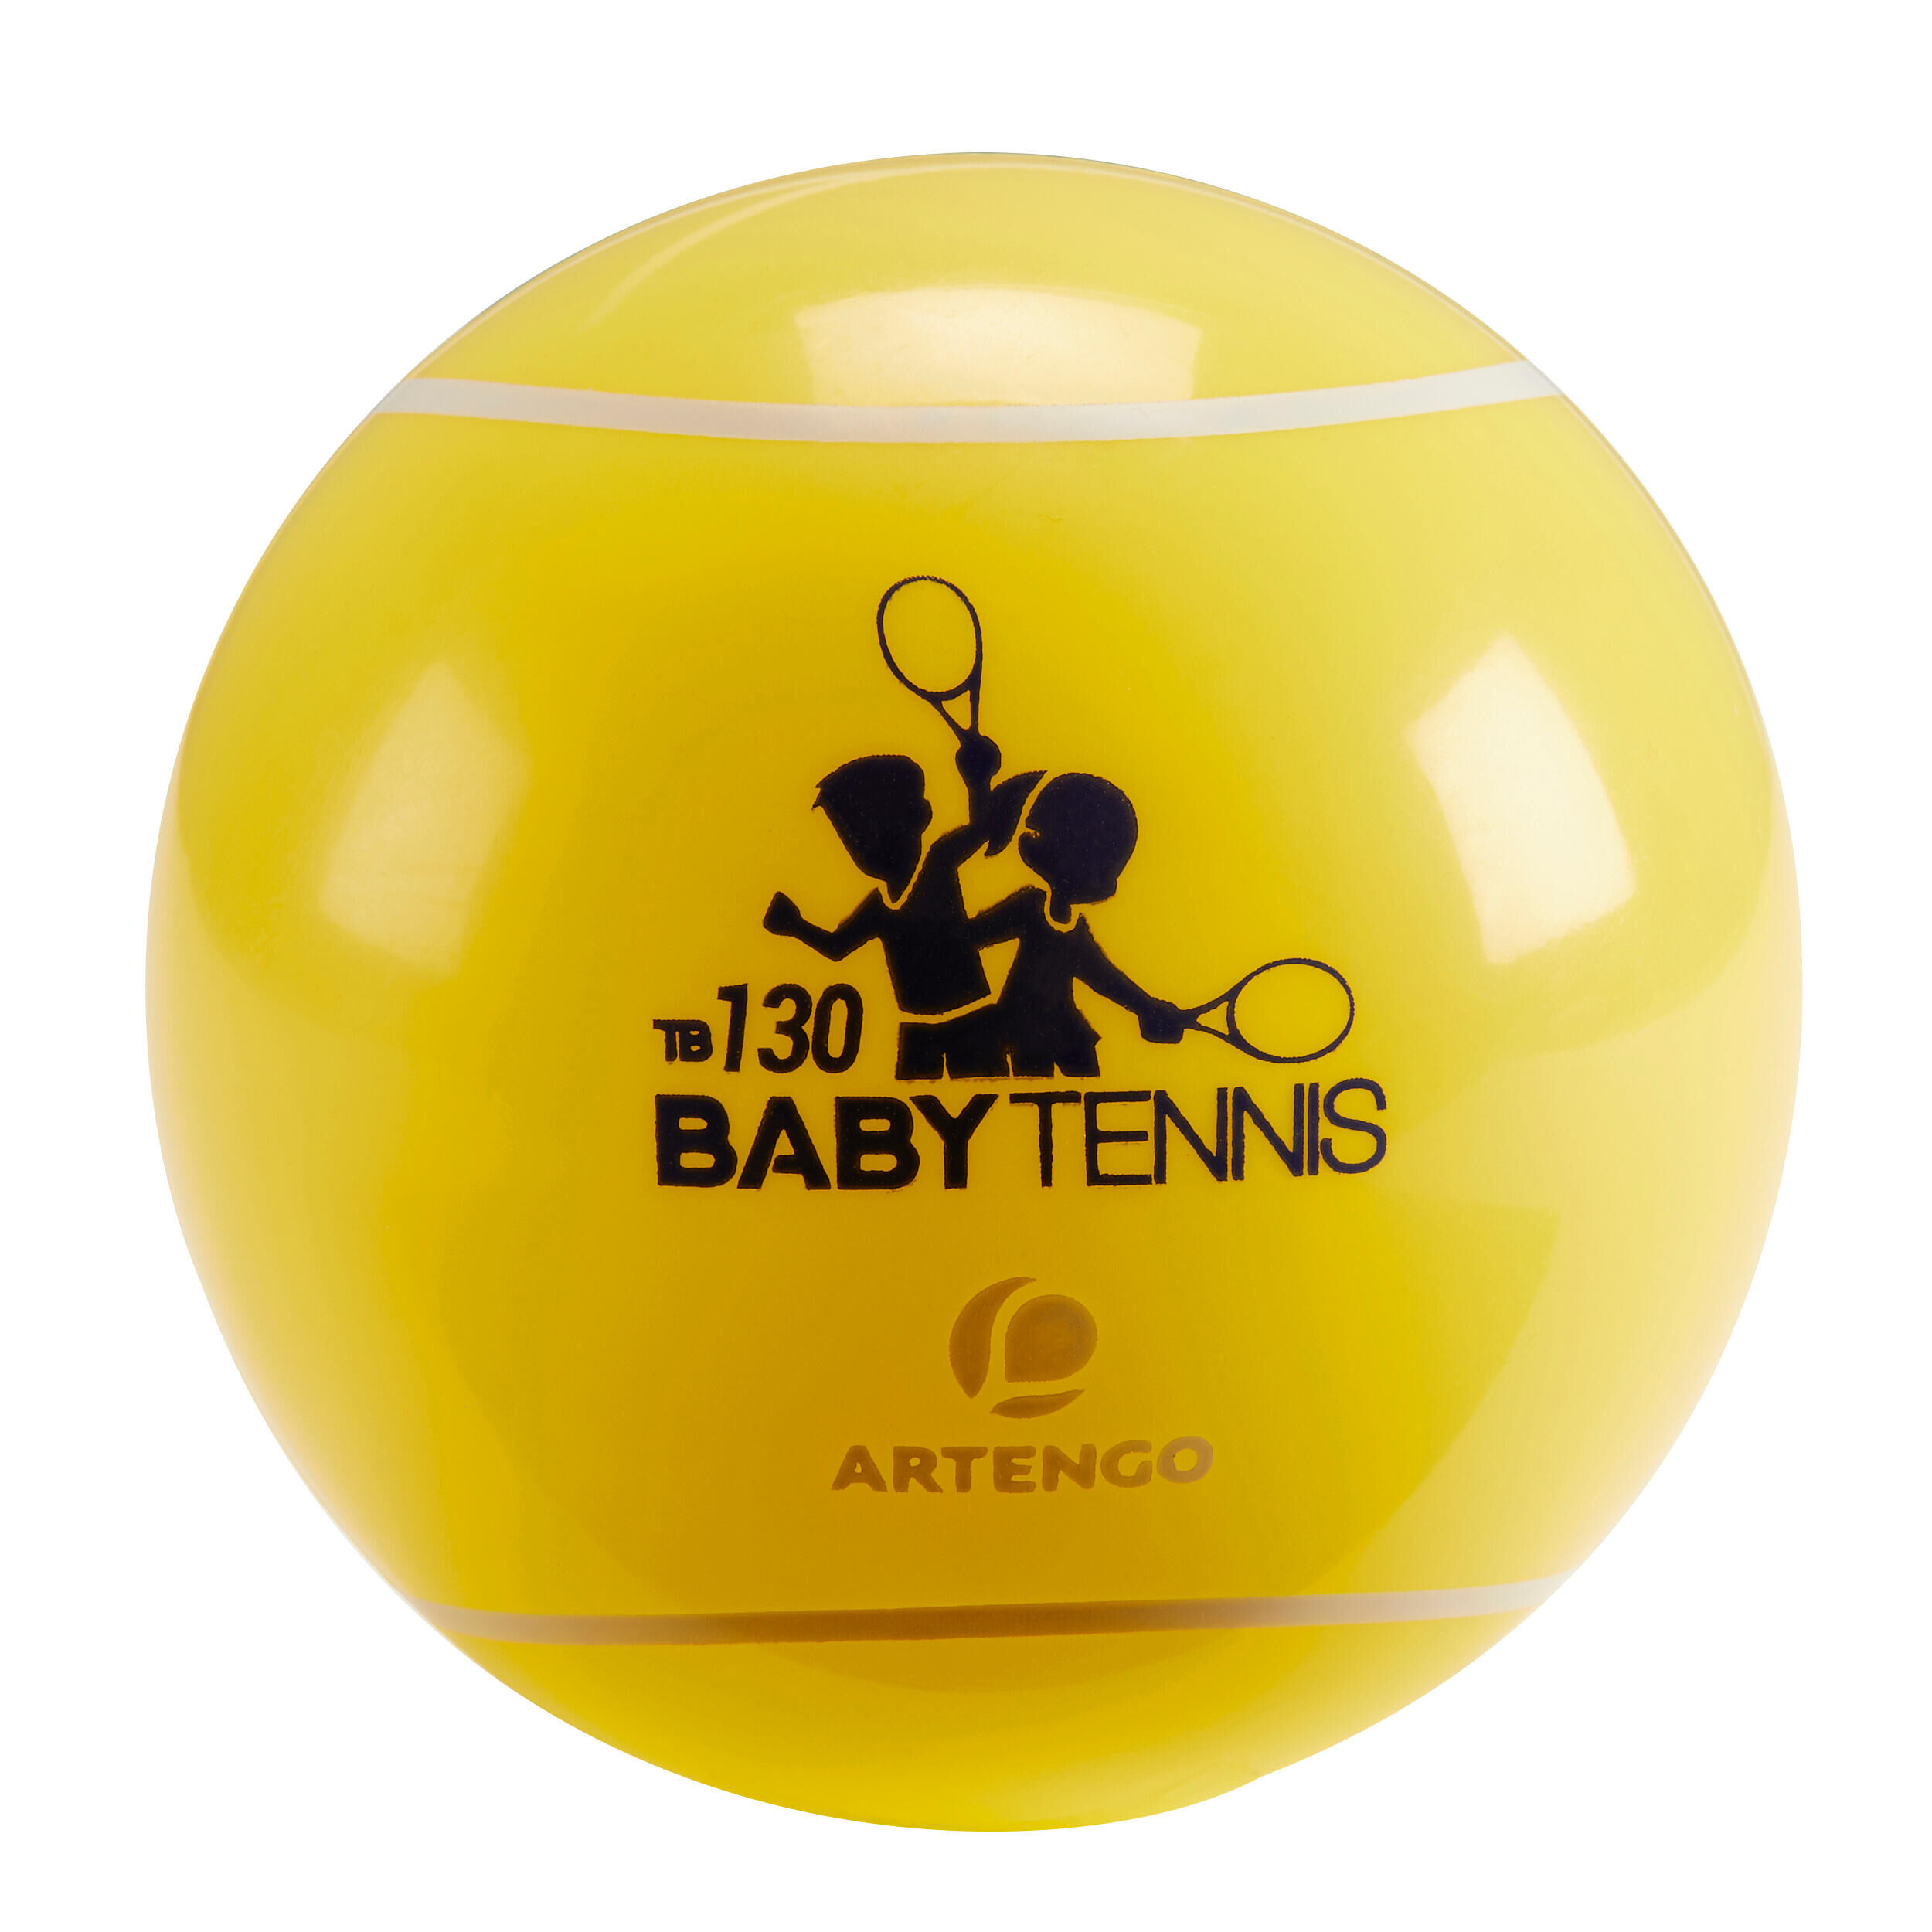 ARTENGO TB130 Baby Tennis Ball - Yellow